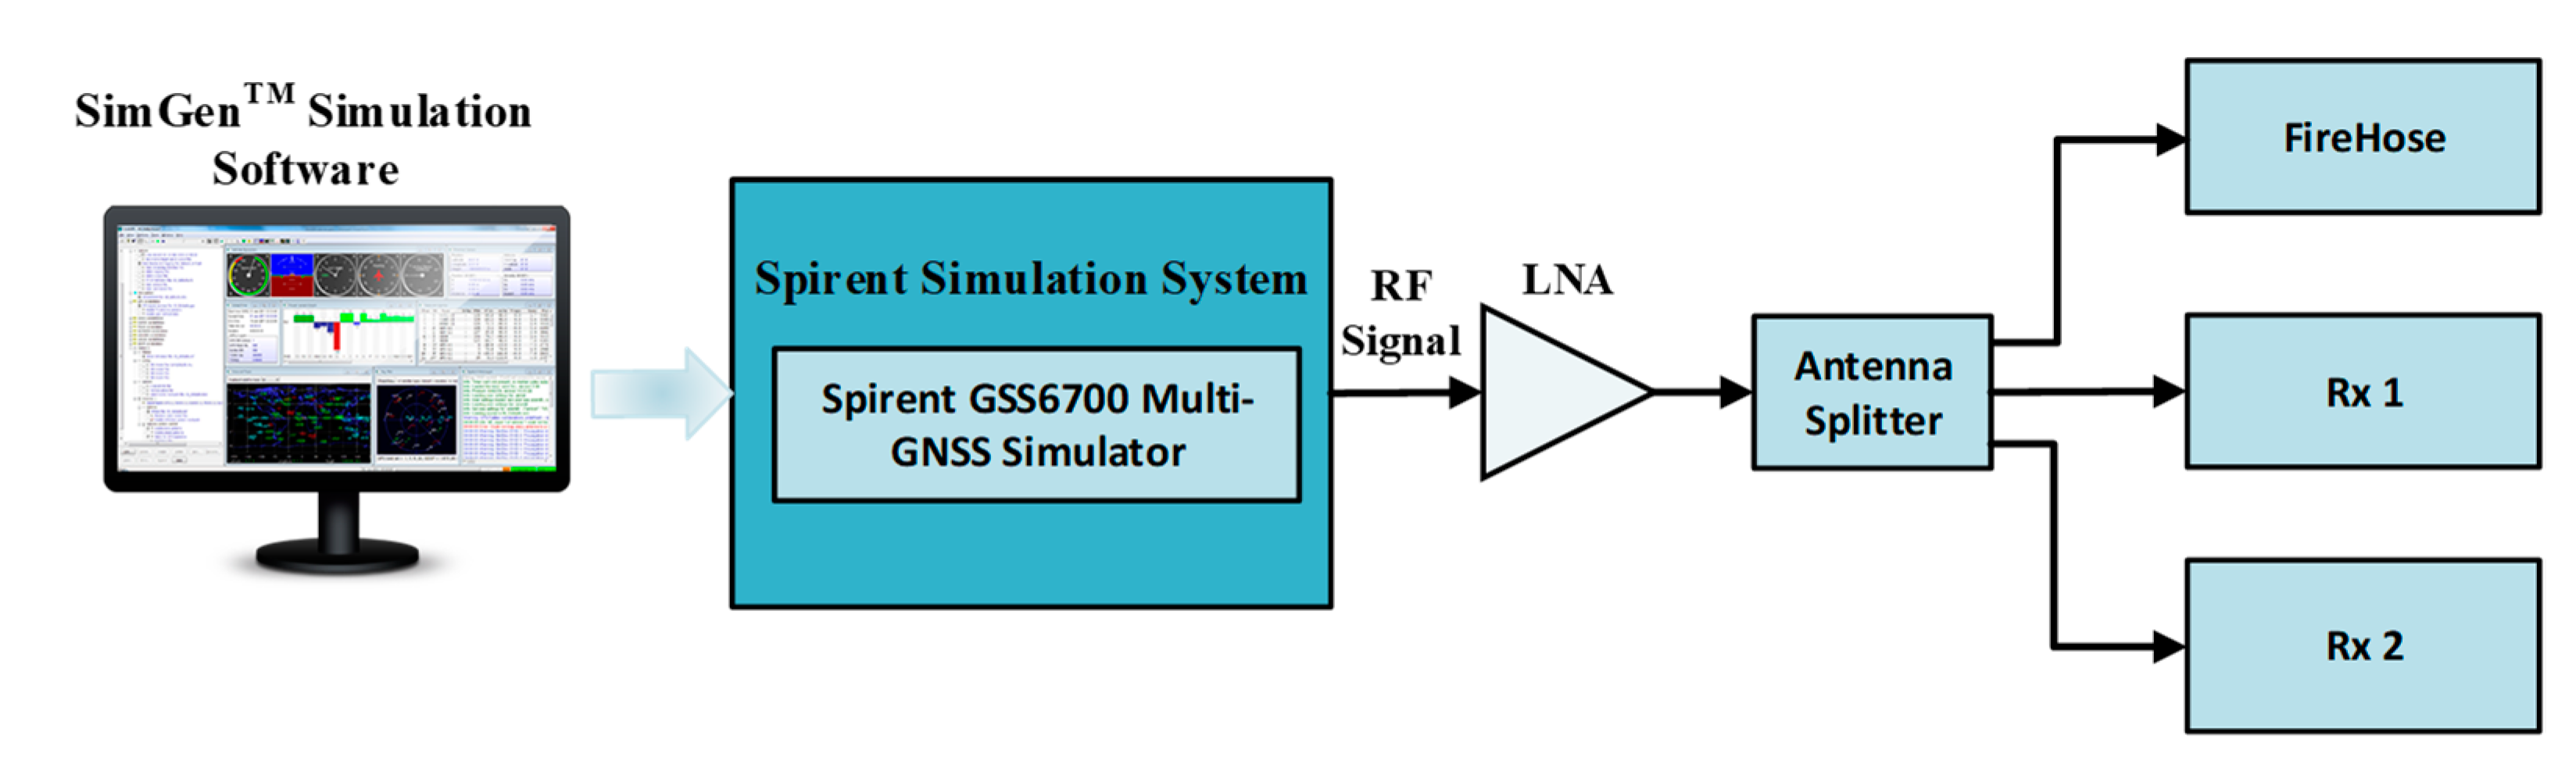 SimGEN Simulator and PNT Product Improvements - Spirent